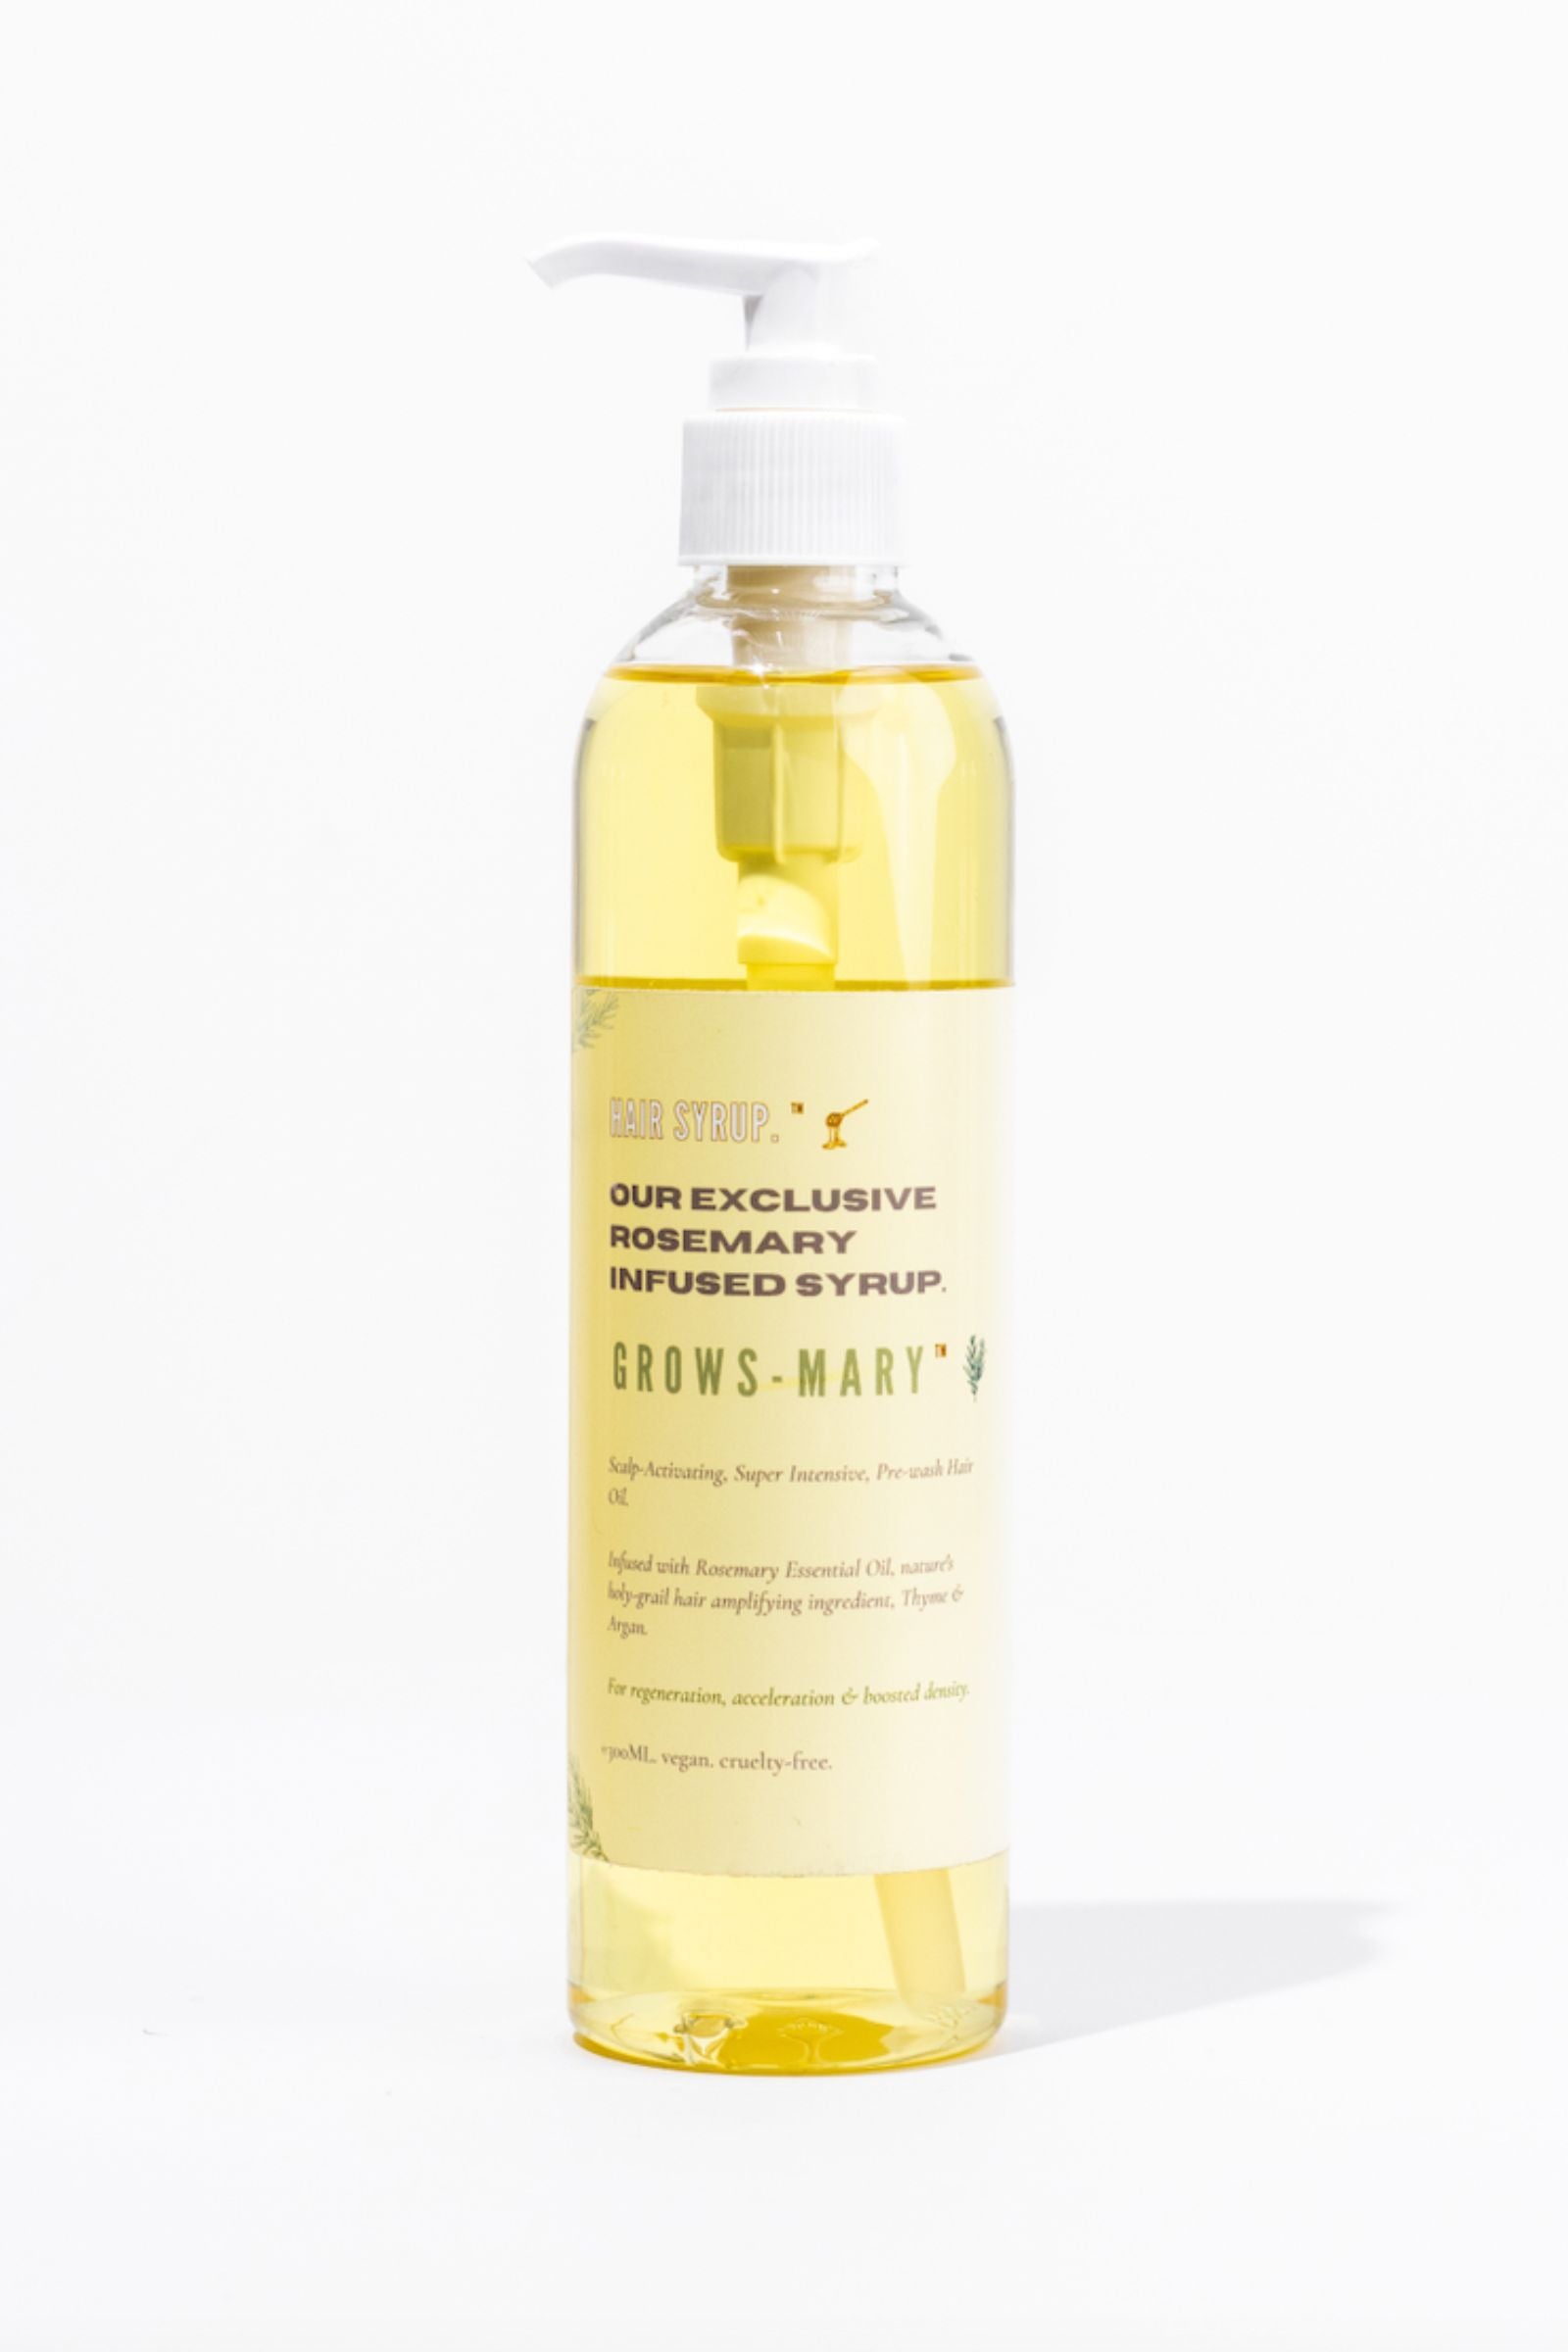 Hair Syrup Rosemary Oil "Growsmary" ®